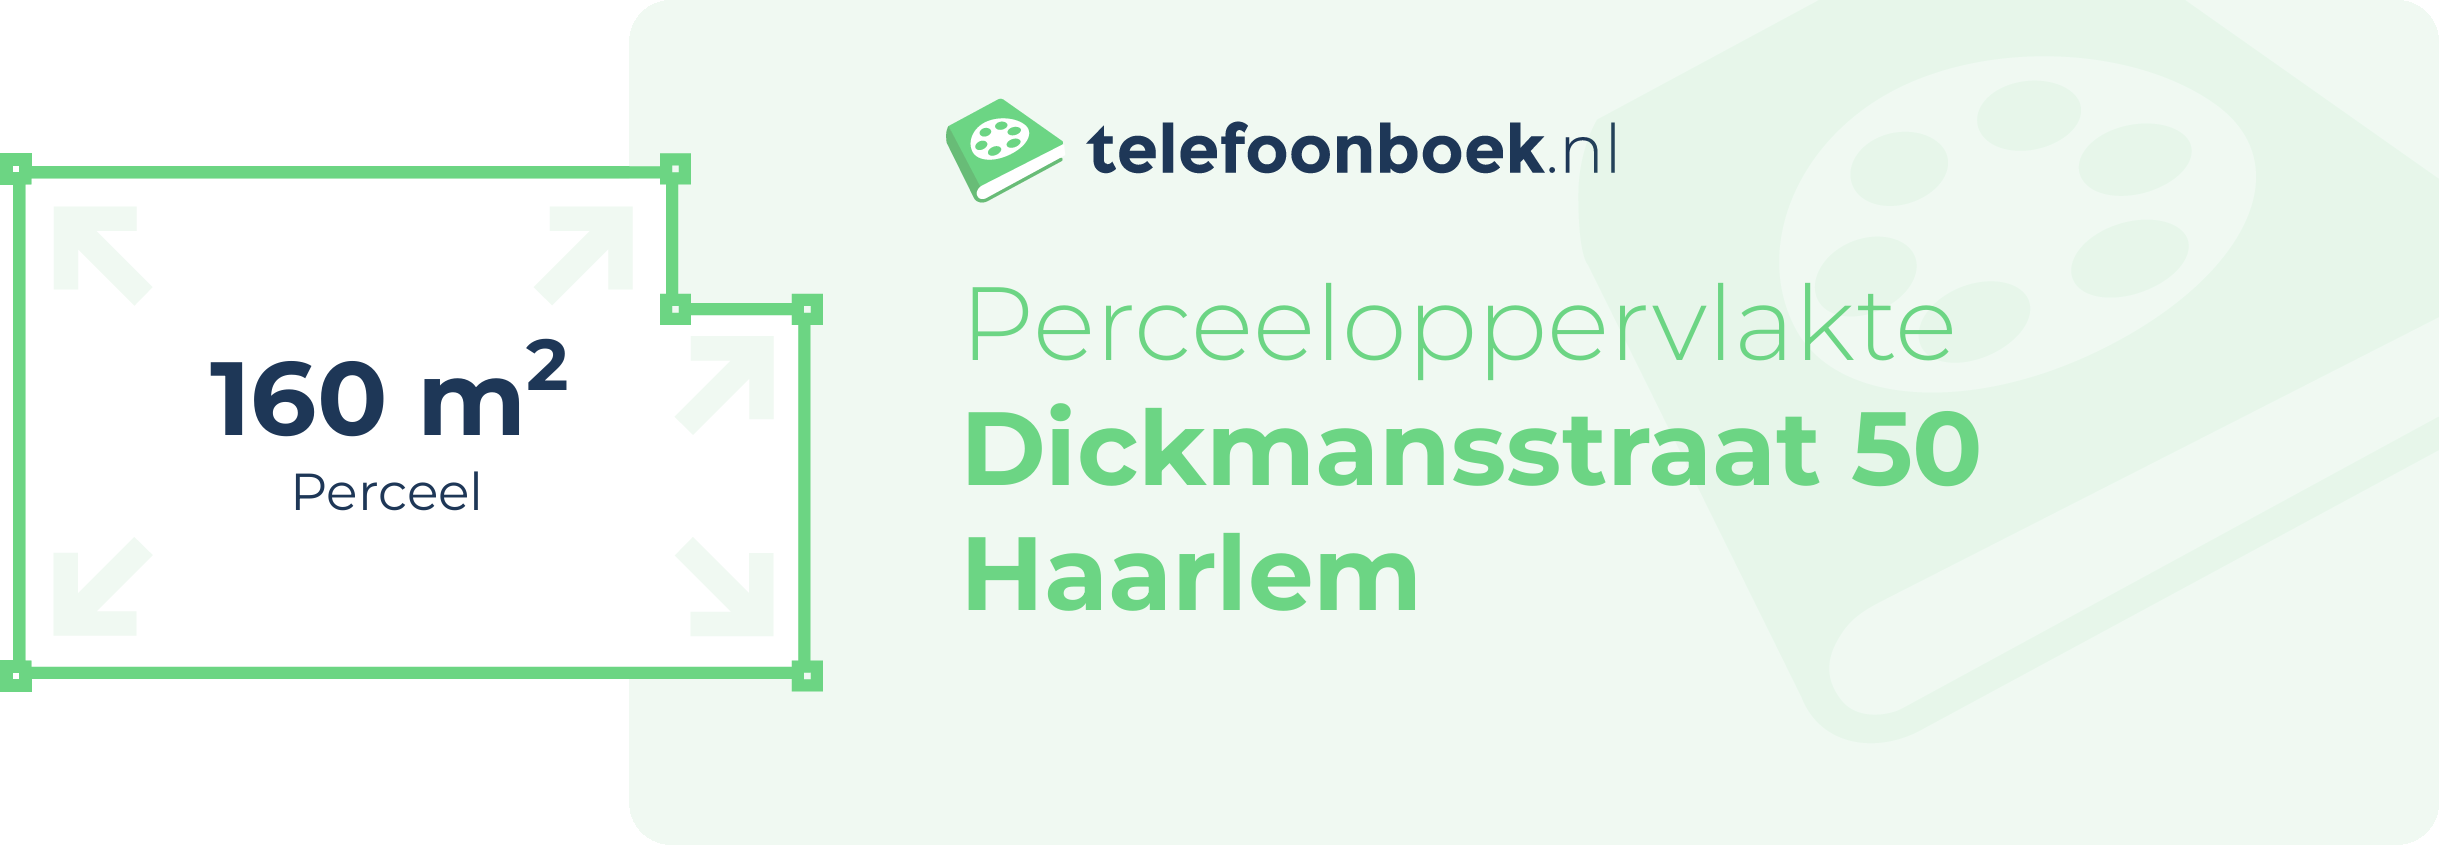 Perceeloppervlakte Dickmansstraat 50 Haarlem